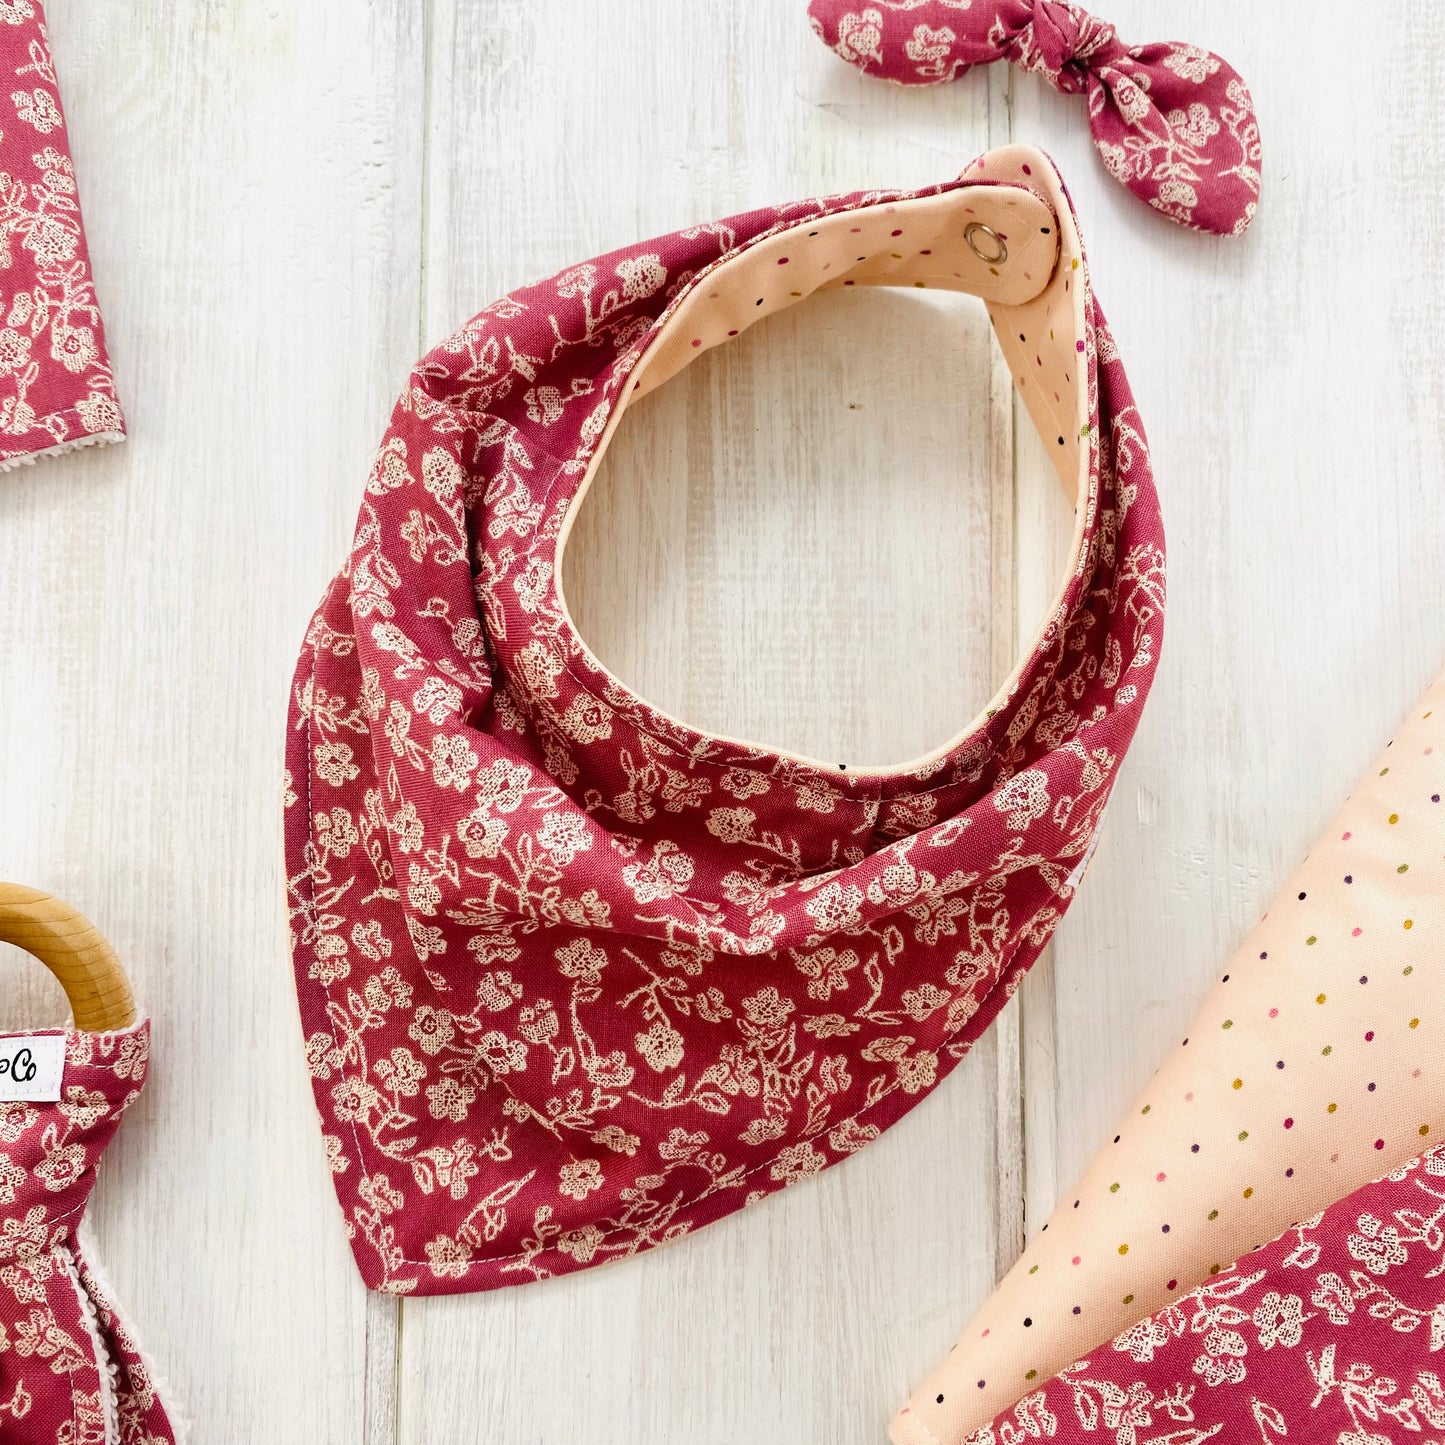 Primrose pink baby bib in a vintage bandana style.